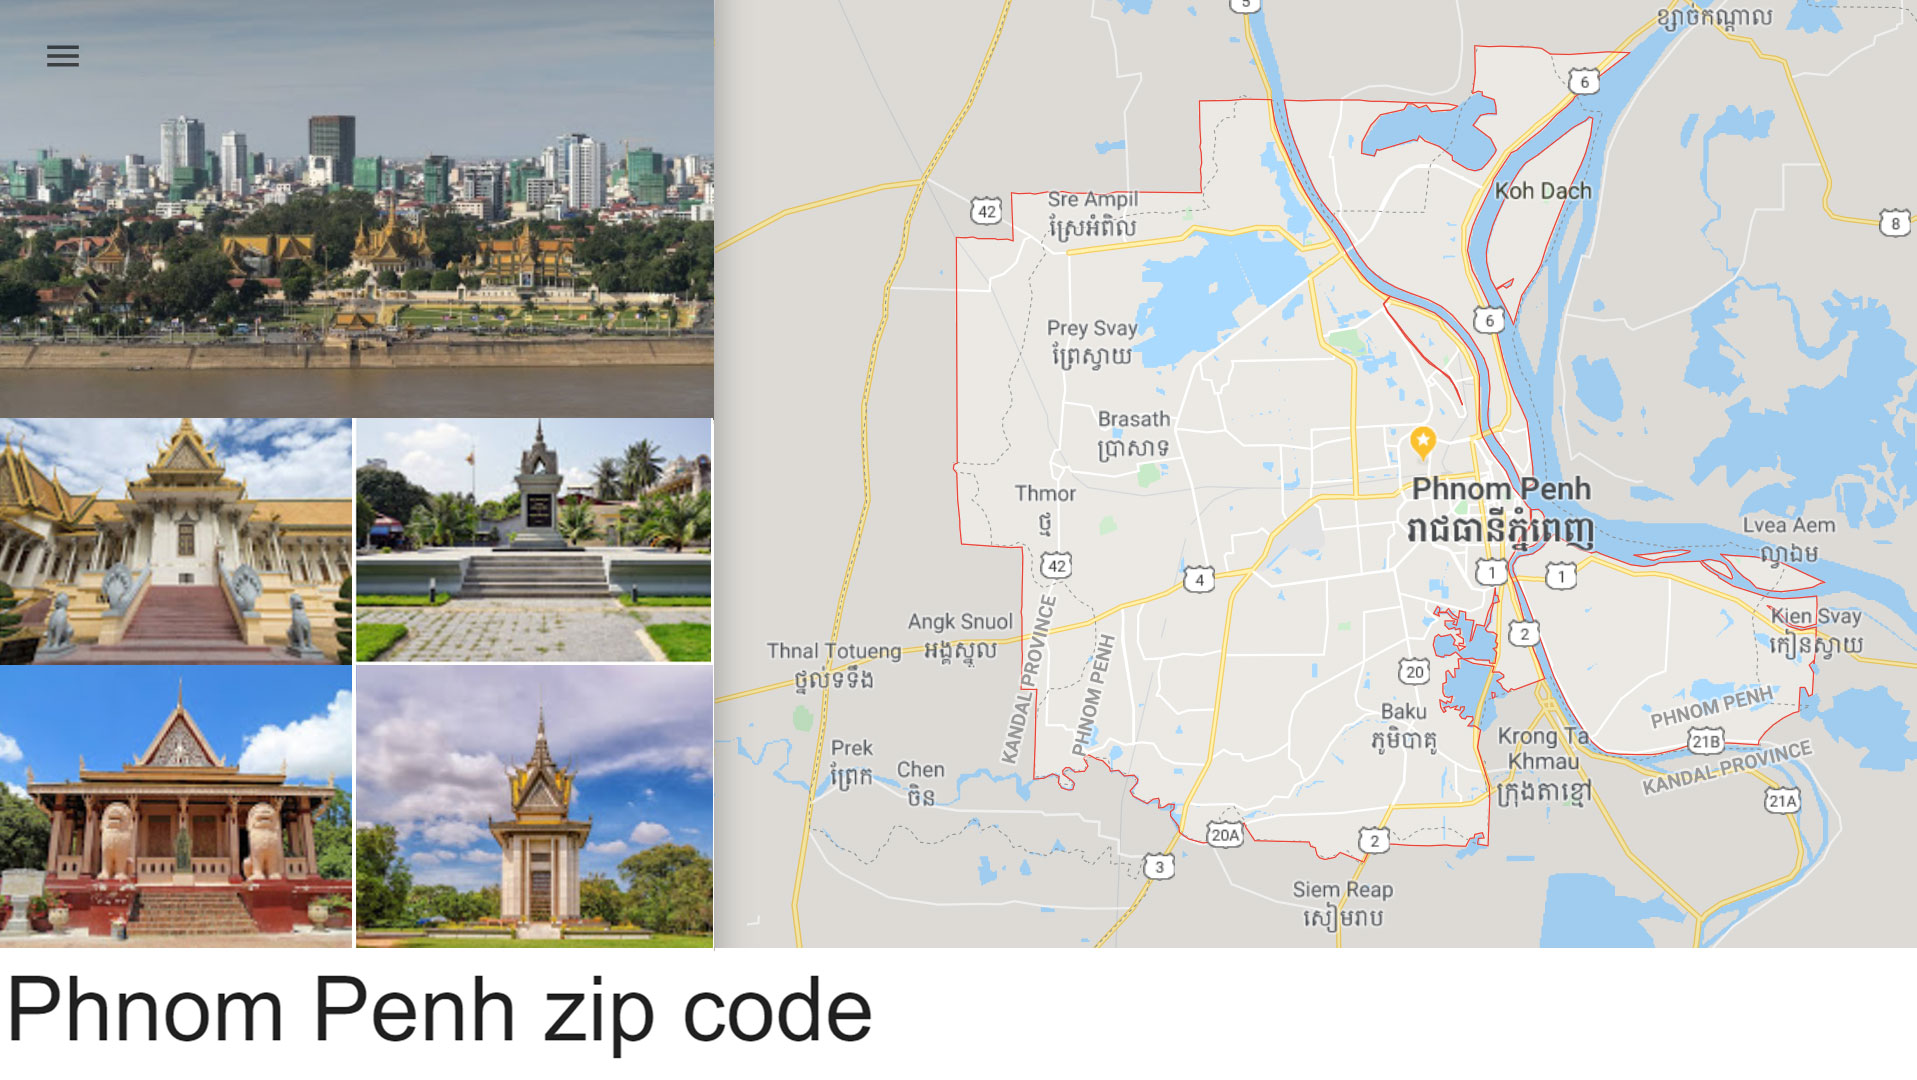 Phnom Penh zip code